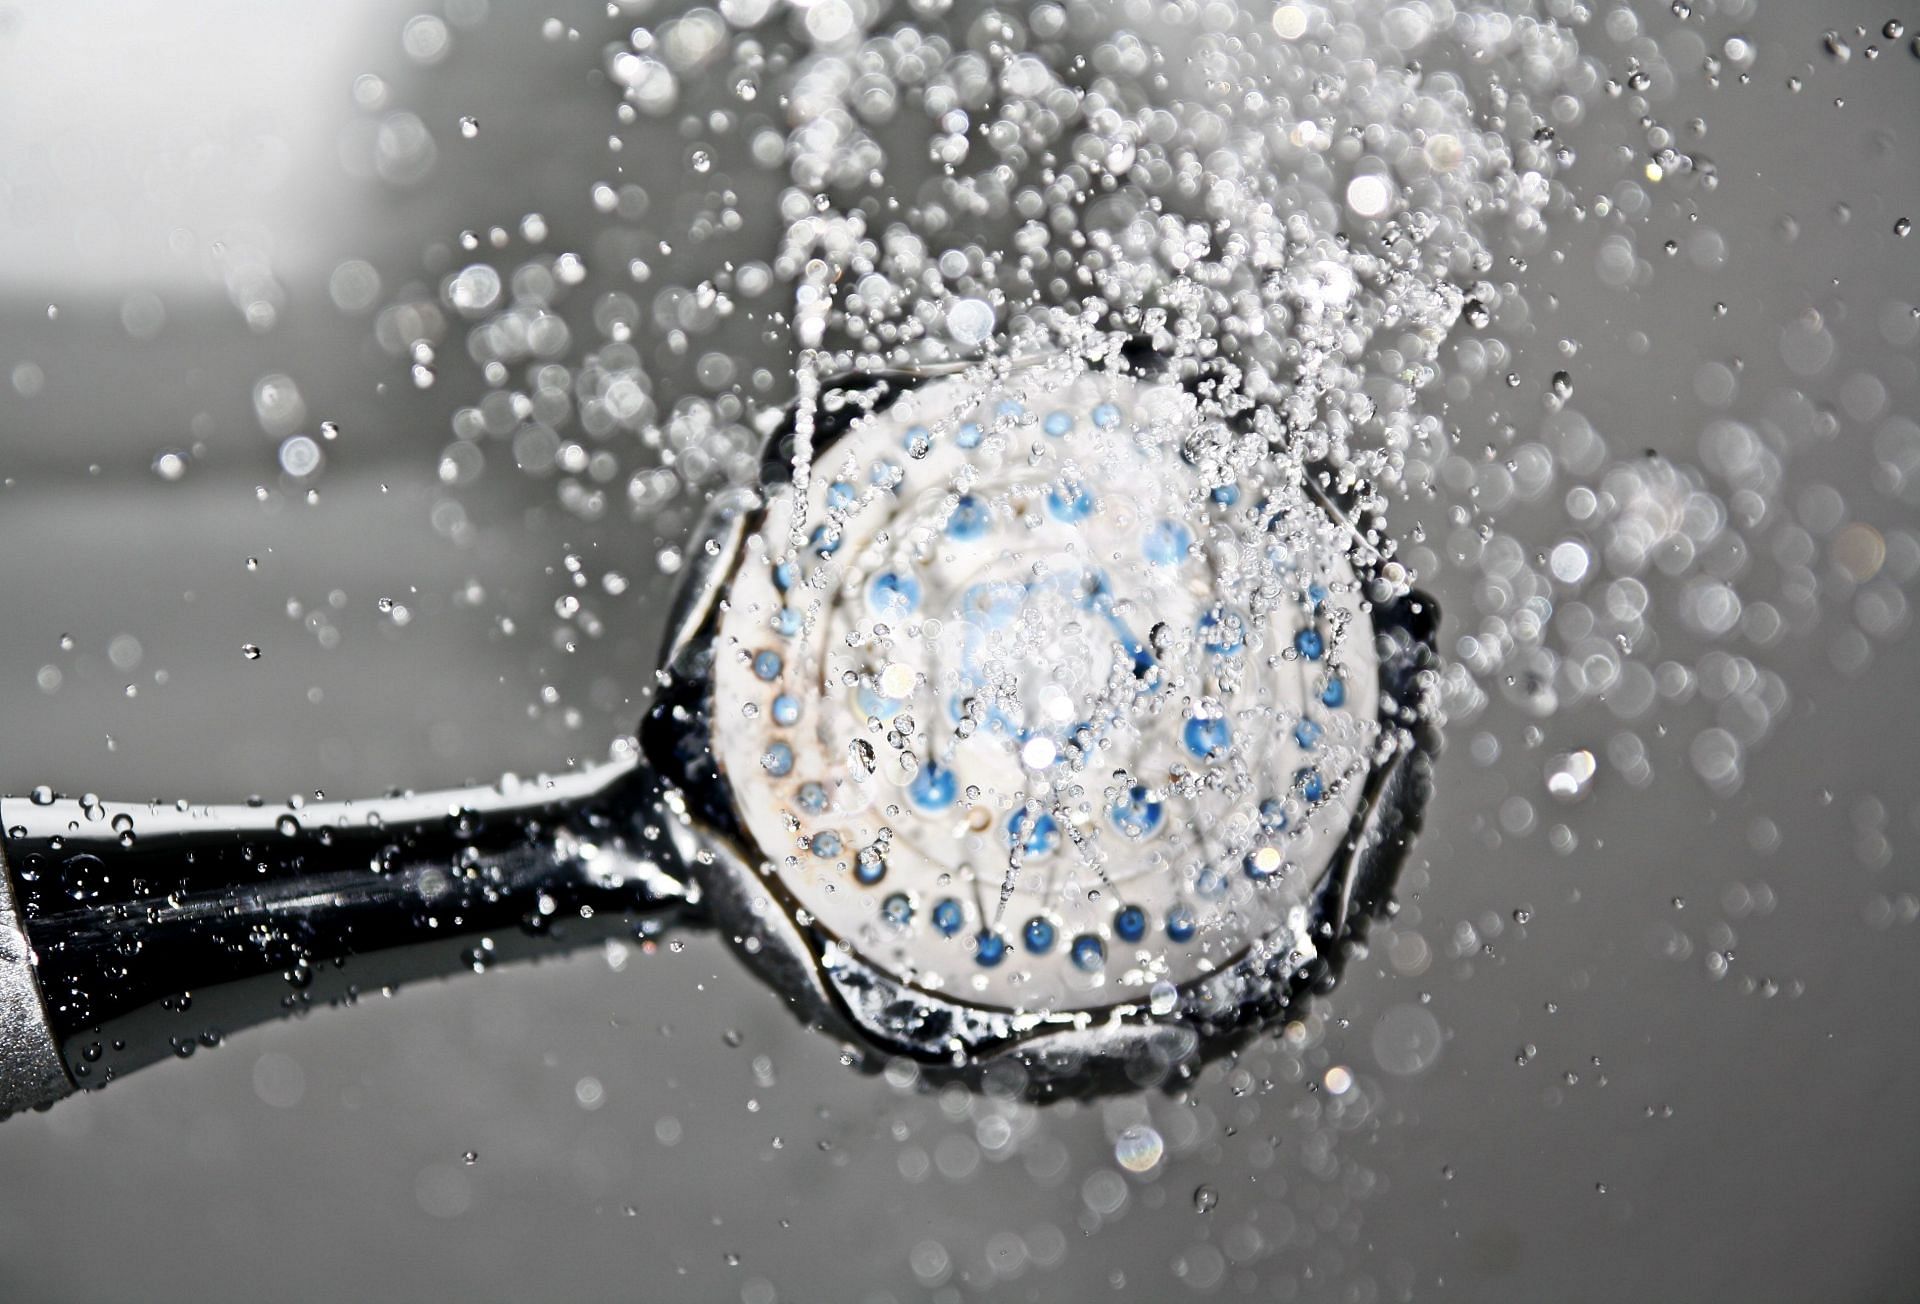 Disadvantages of hot shower (image sourced via Pexels / Photo by PixaBay)